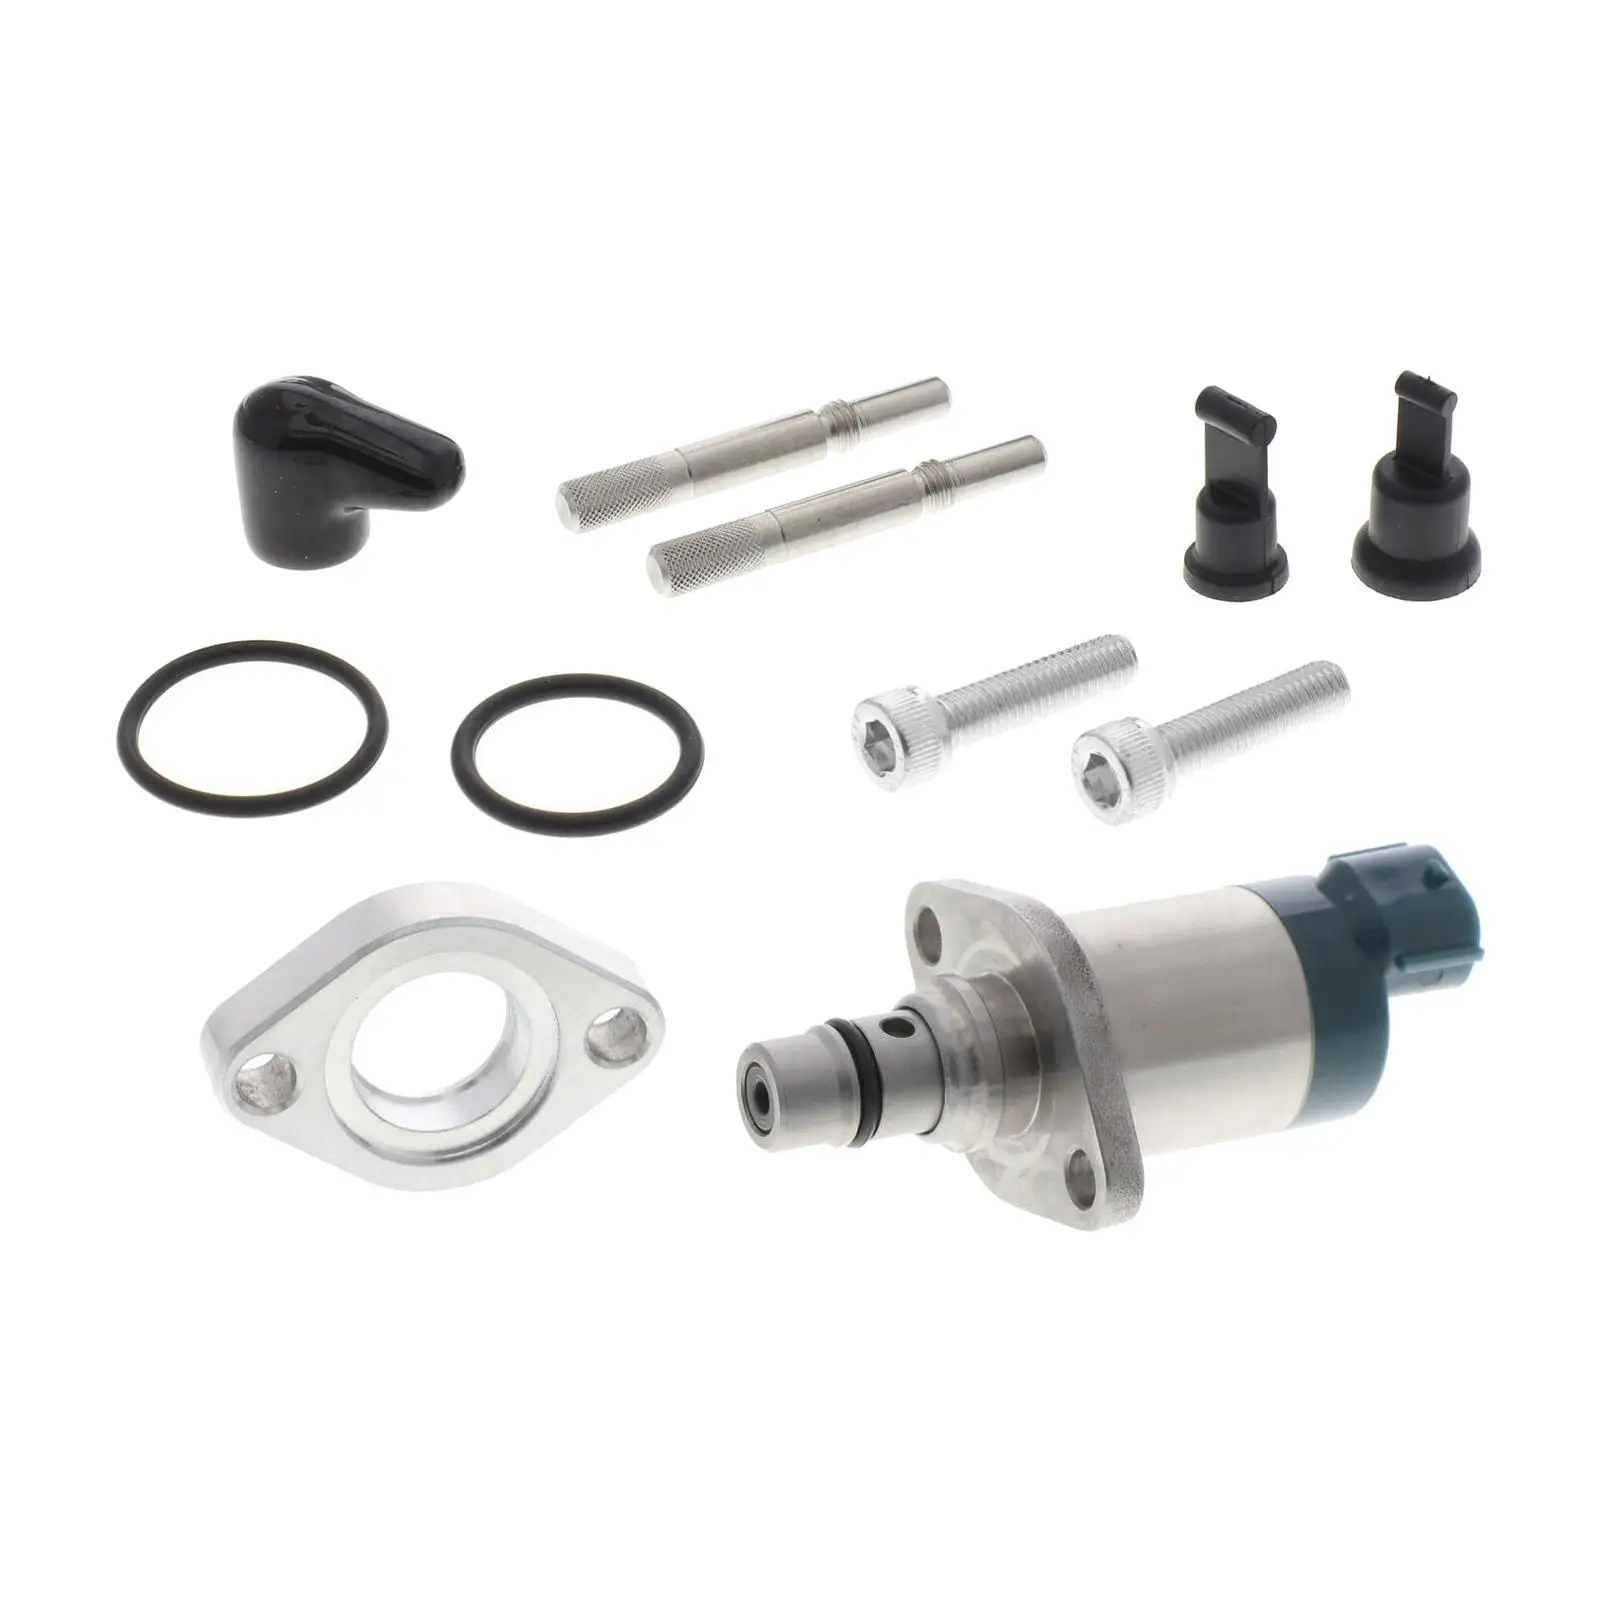 Car Fuel Pump Suction Control Valve A6860LC10B A38-11-0004 16860LC10A A6860-Lc10A for Mitsubishi L200 Replace Parts